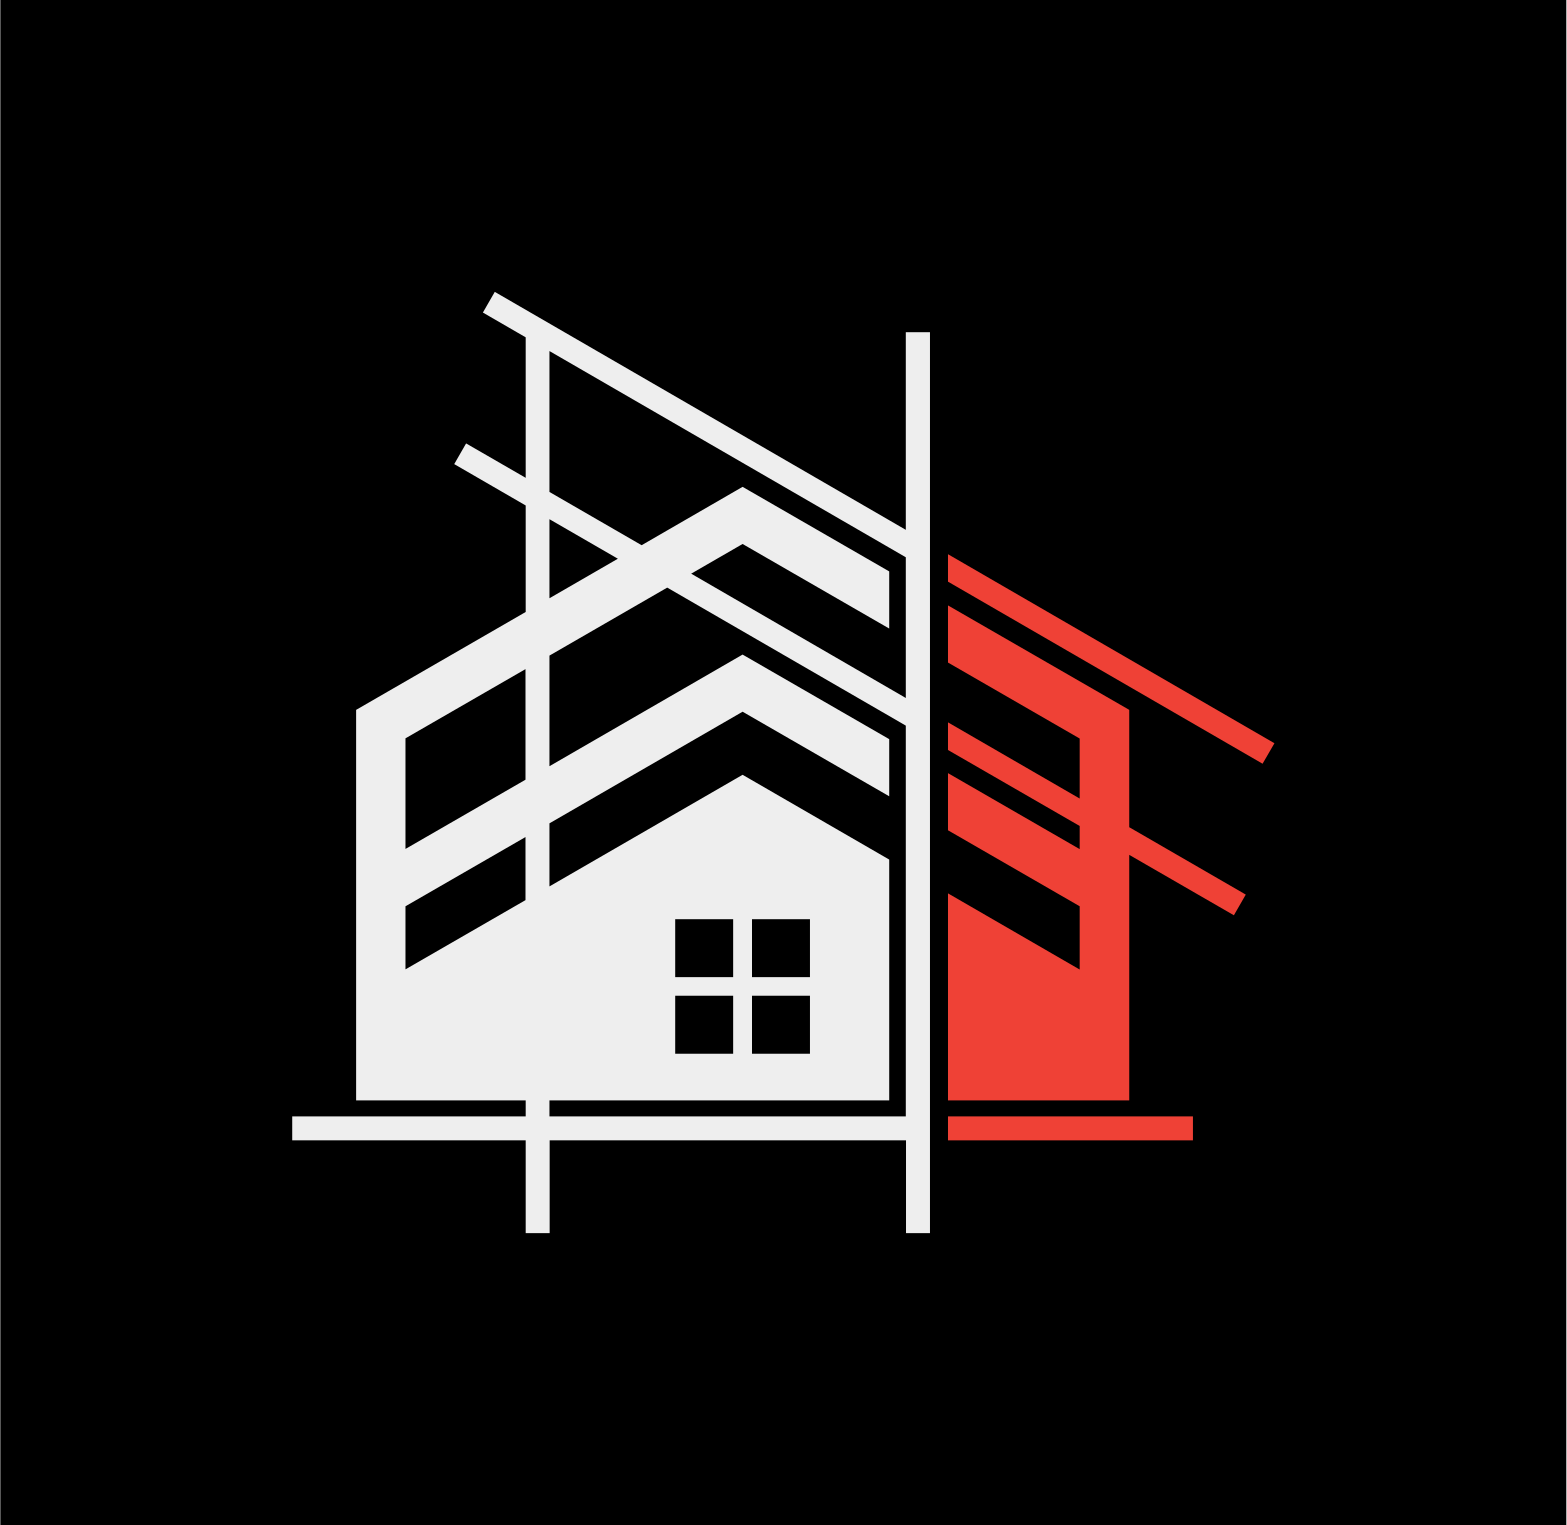 La cabane à prestige Logo